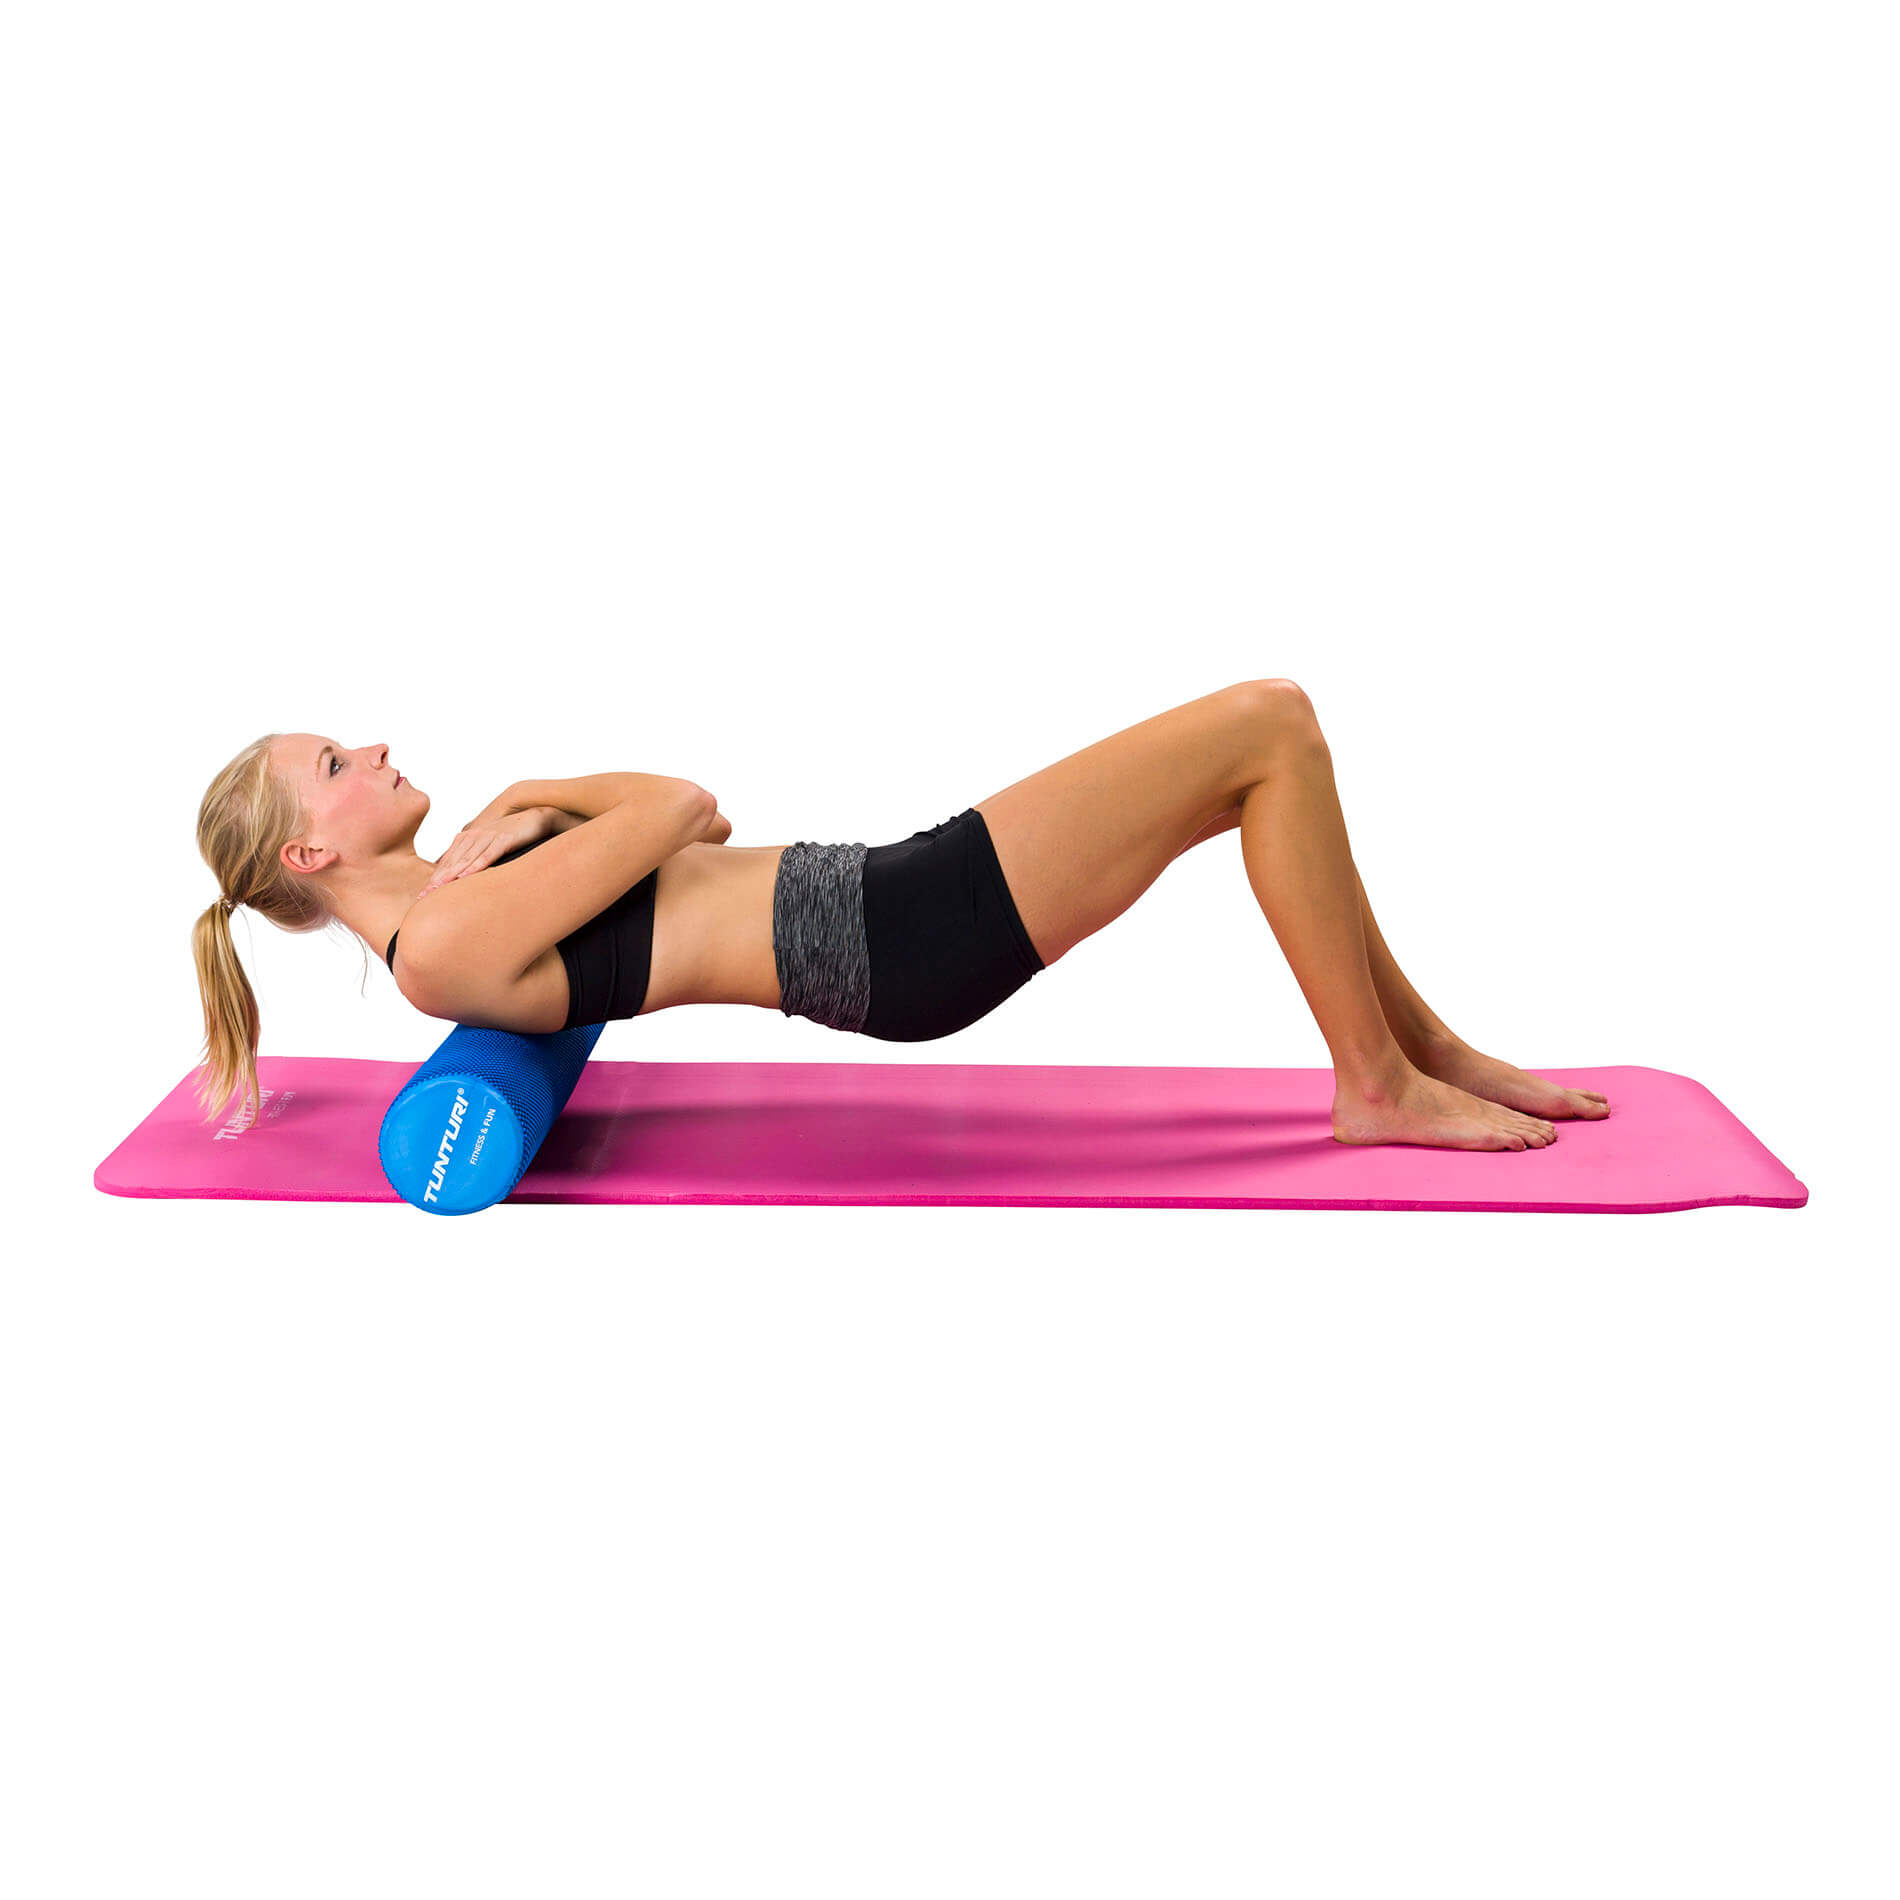 Yoga massage roller